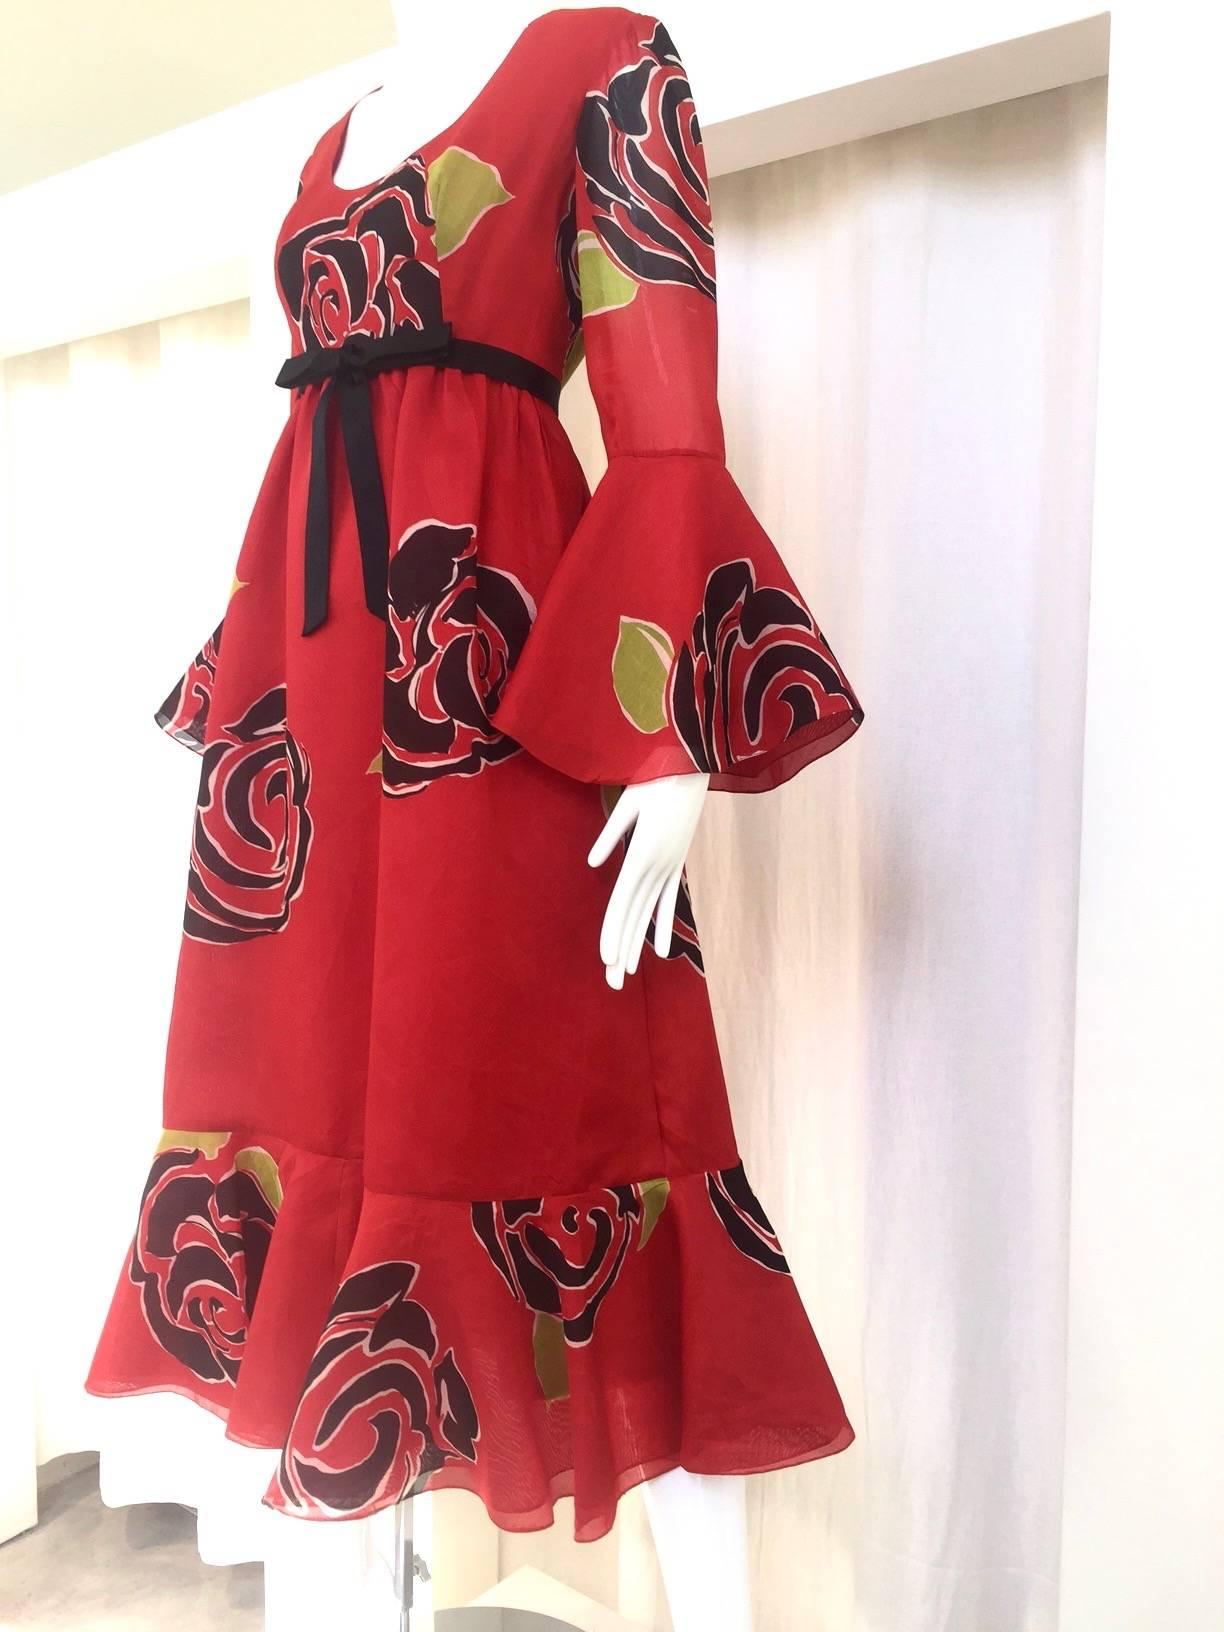 1970s SARMI red and black silk organza floral print maxi dress with satin bow. 3/4 sleeves.
Medium 
size: 6/ Bust: 36